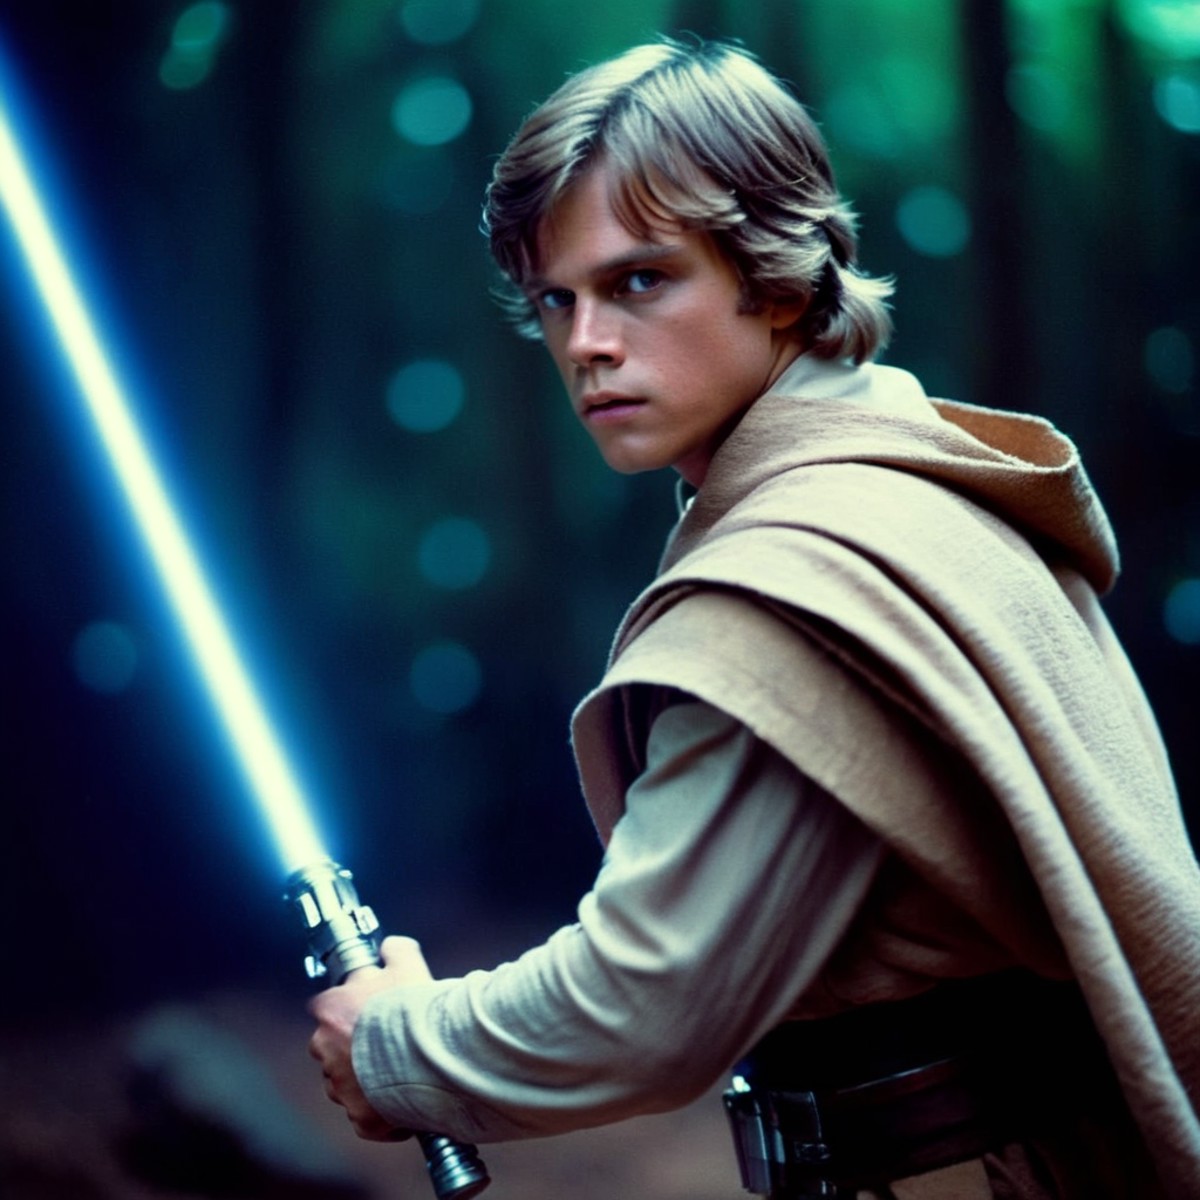 cinematic film still of  <lora:Luke Skywalker:1.2>
Luke Skywalker a young man with a lightsaber sword in his hand in star ...